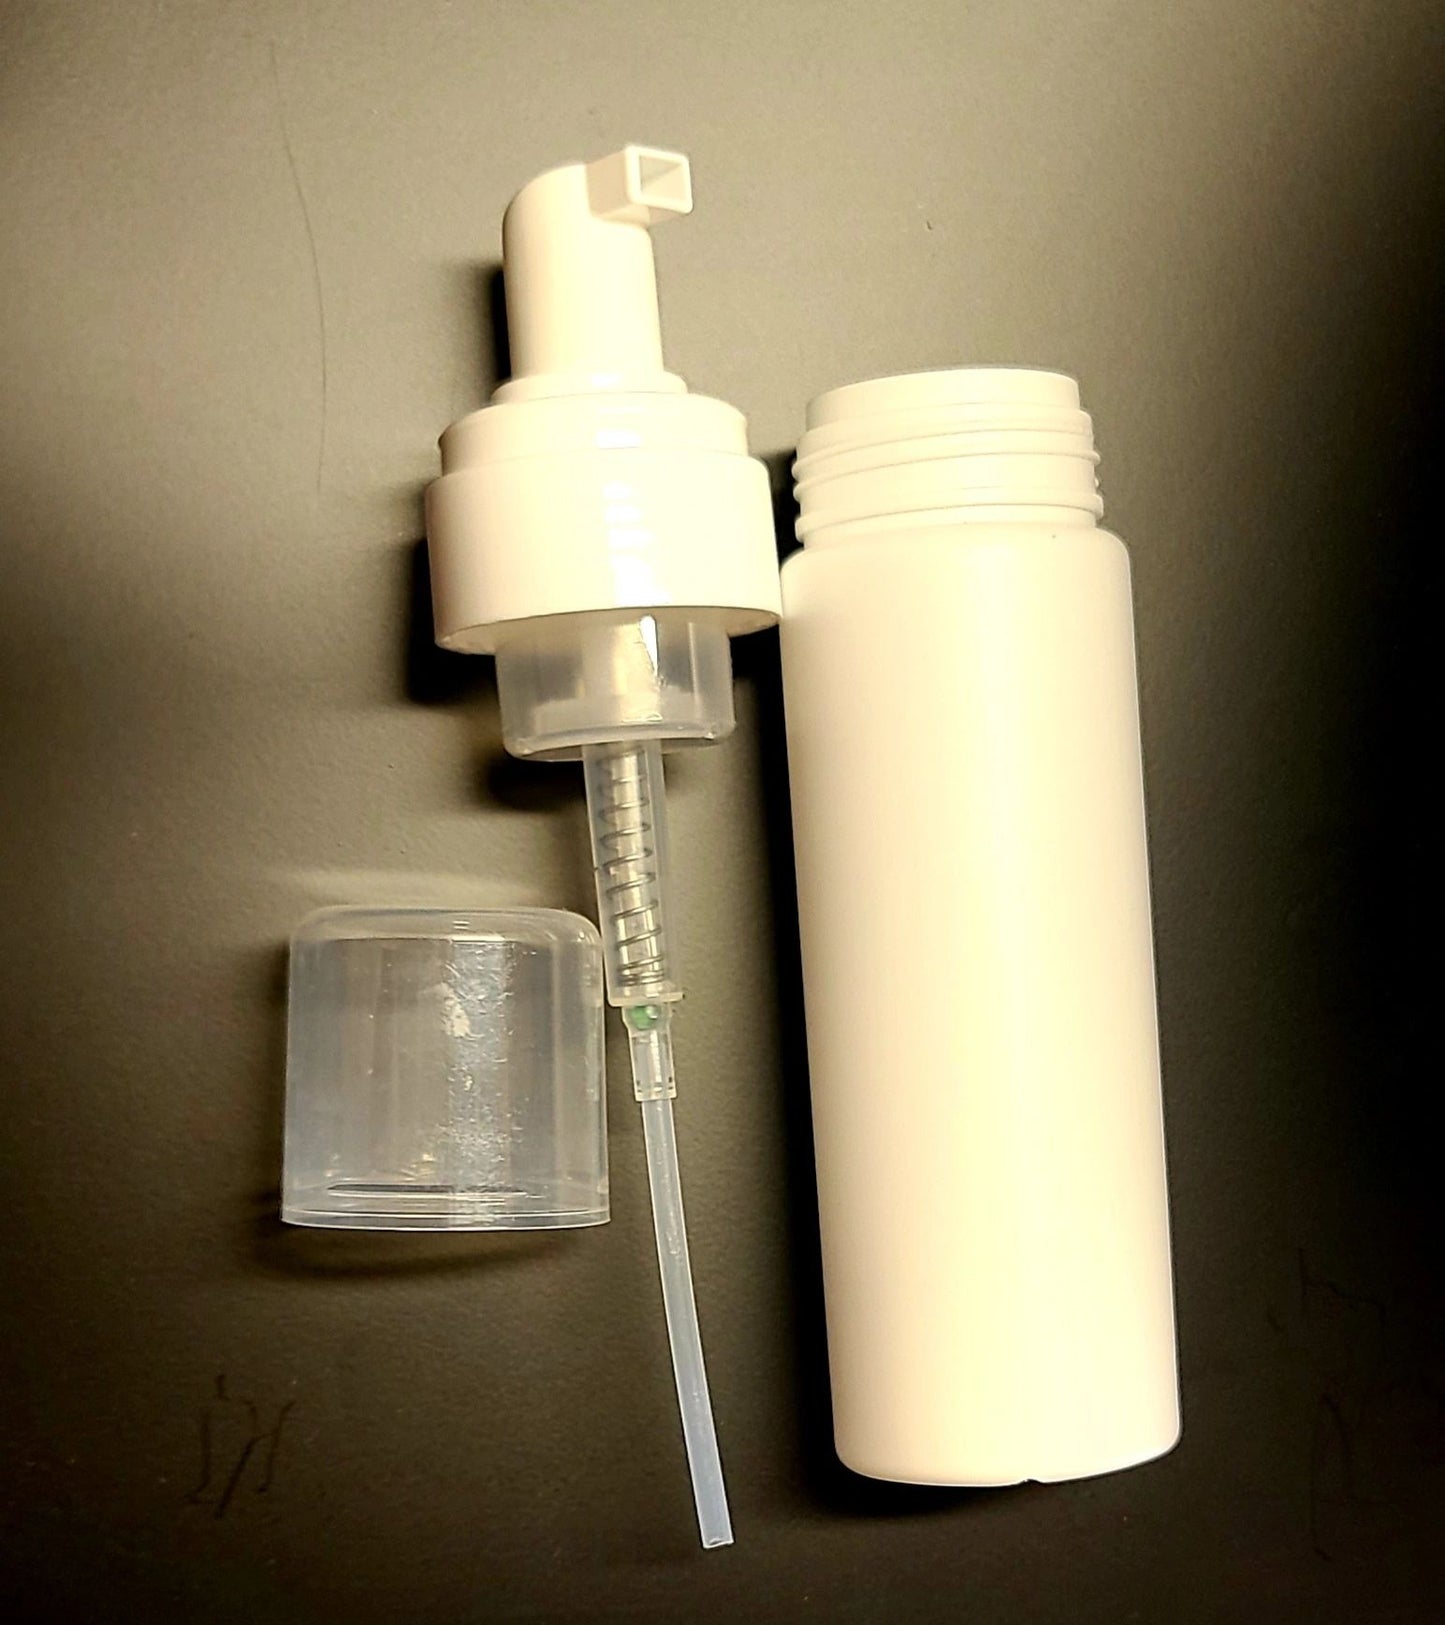 Plastic foaming soap dispenser, Pump bottle for liquid soap